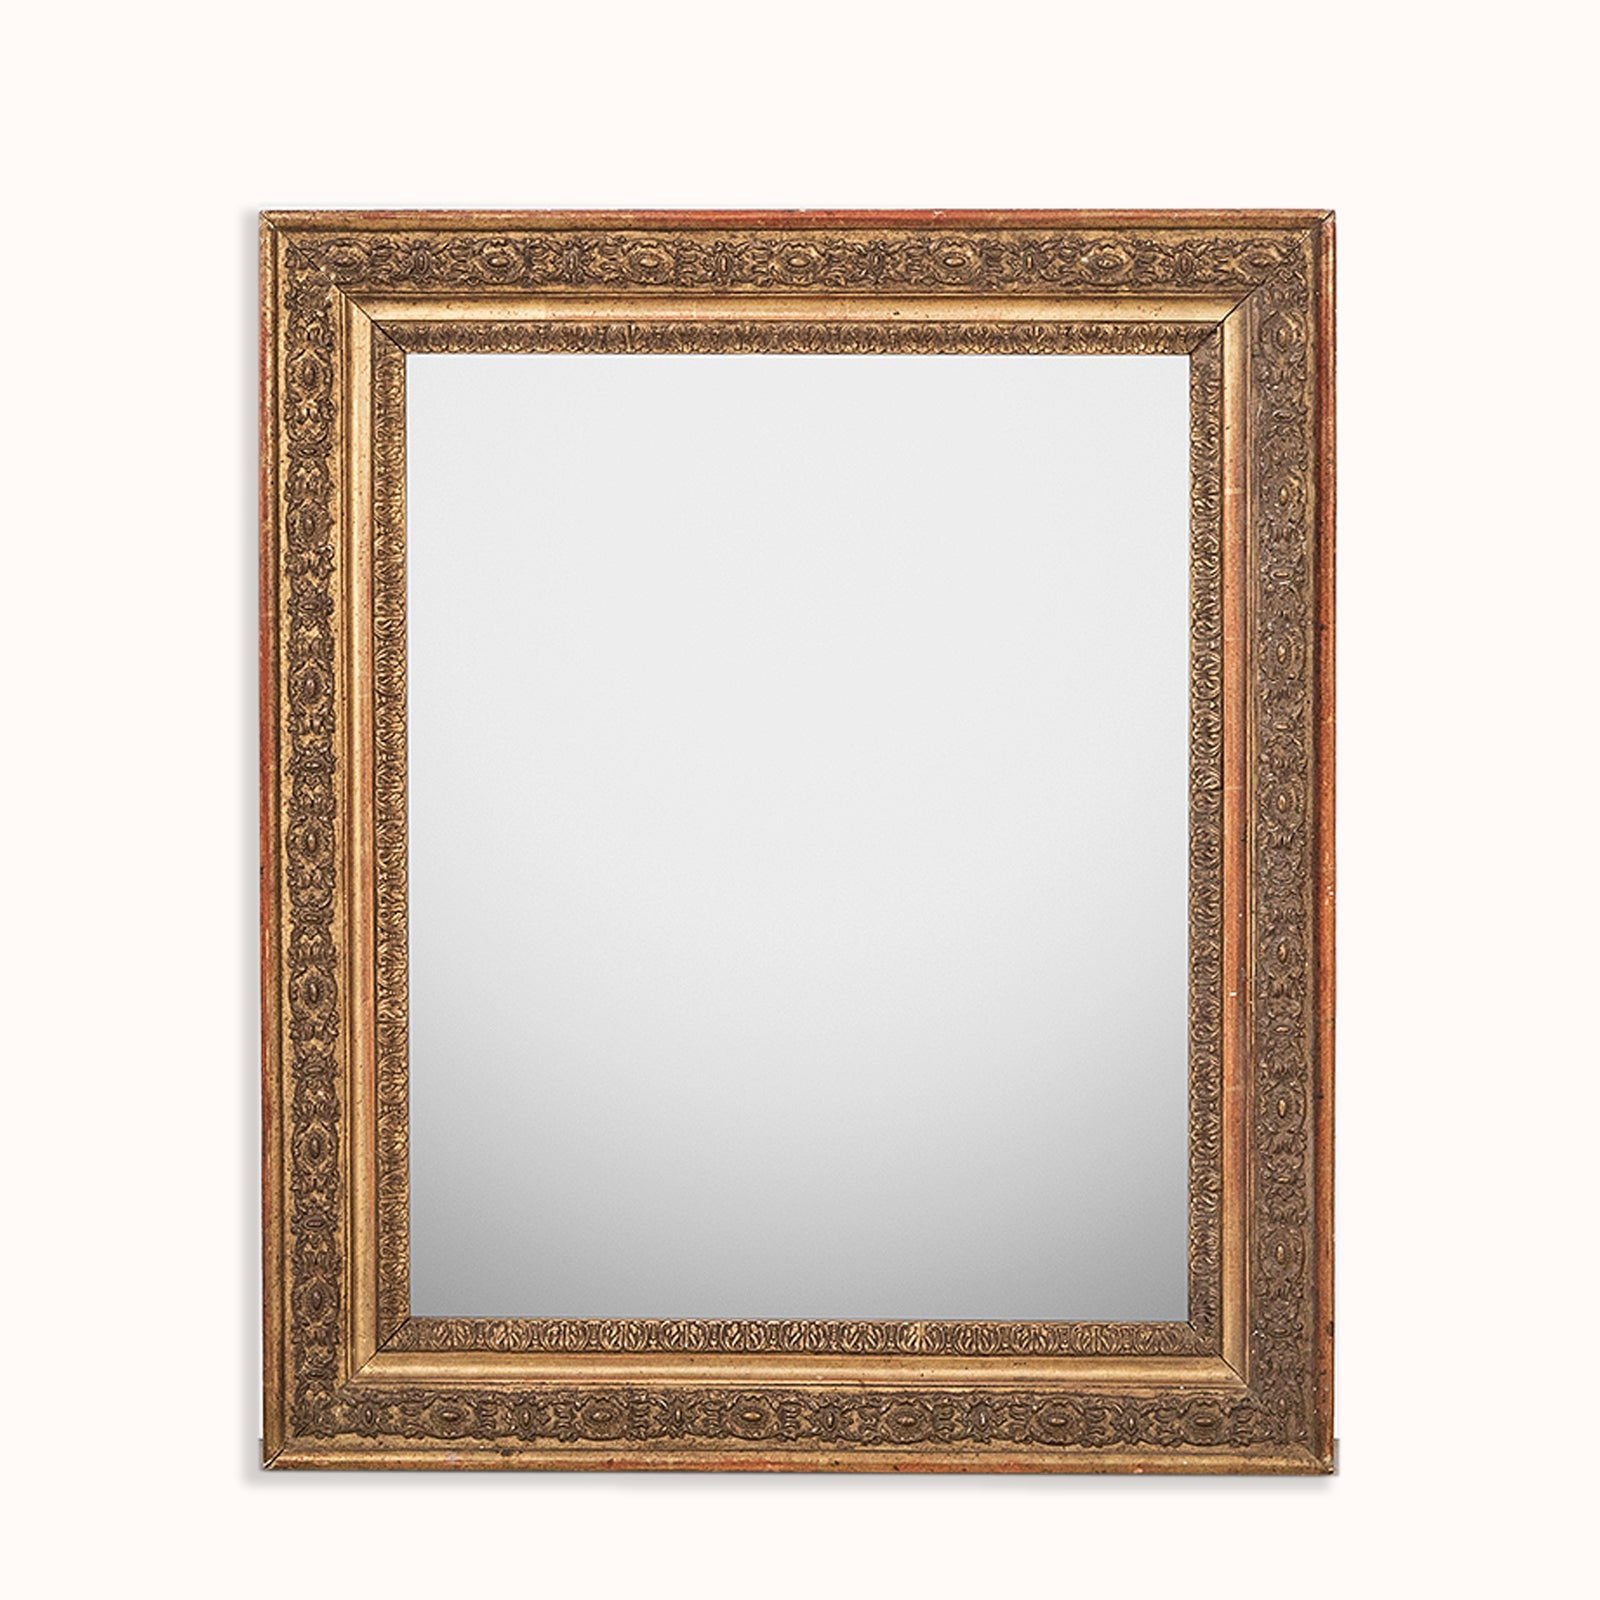 Antique Italian 19th C Rectangular Mirror with Decorated Frame